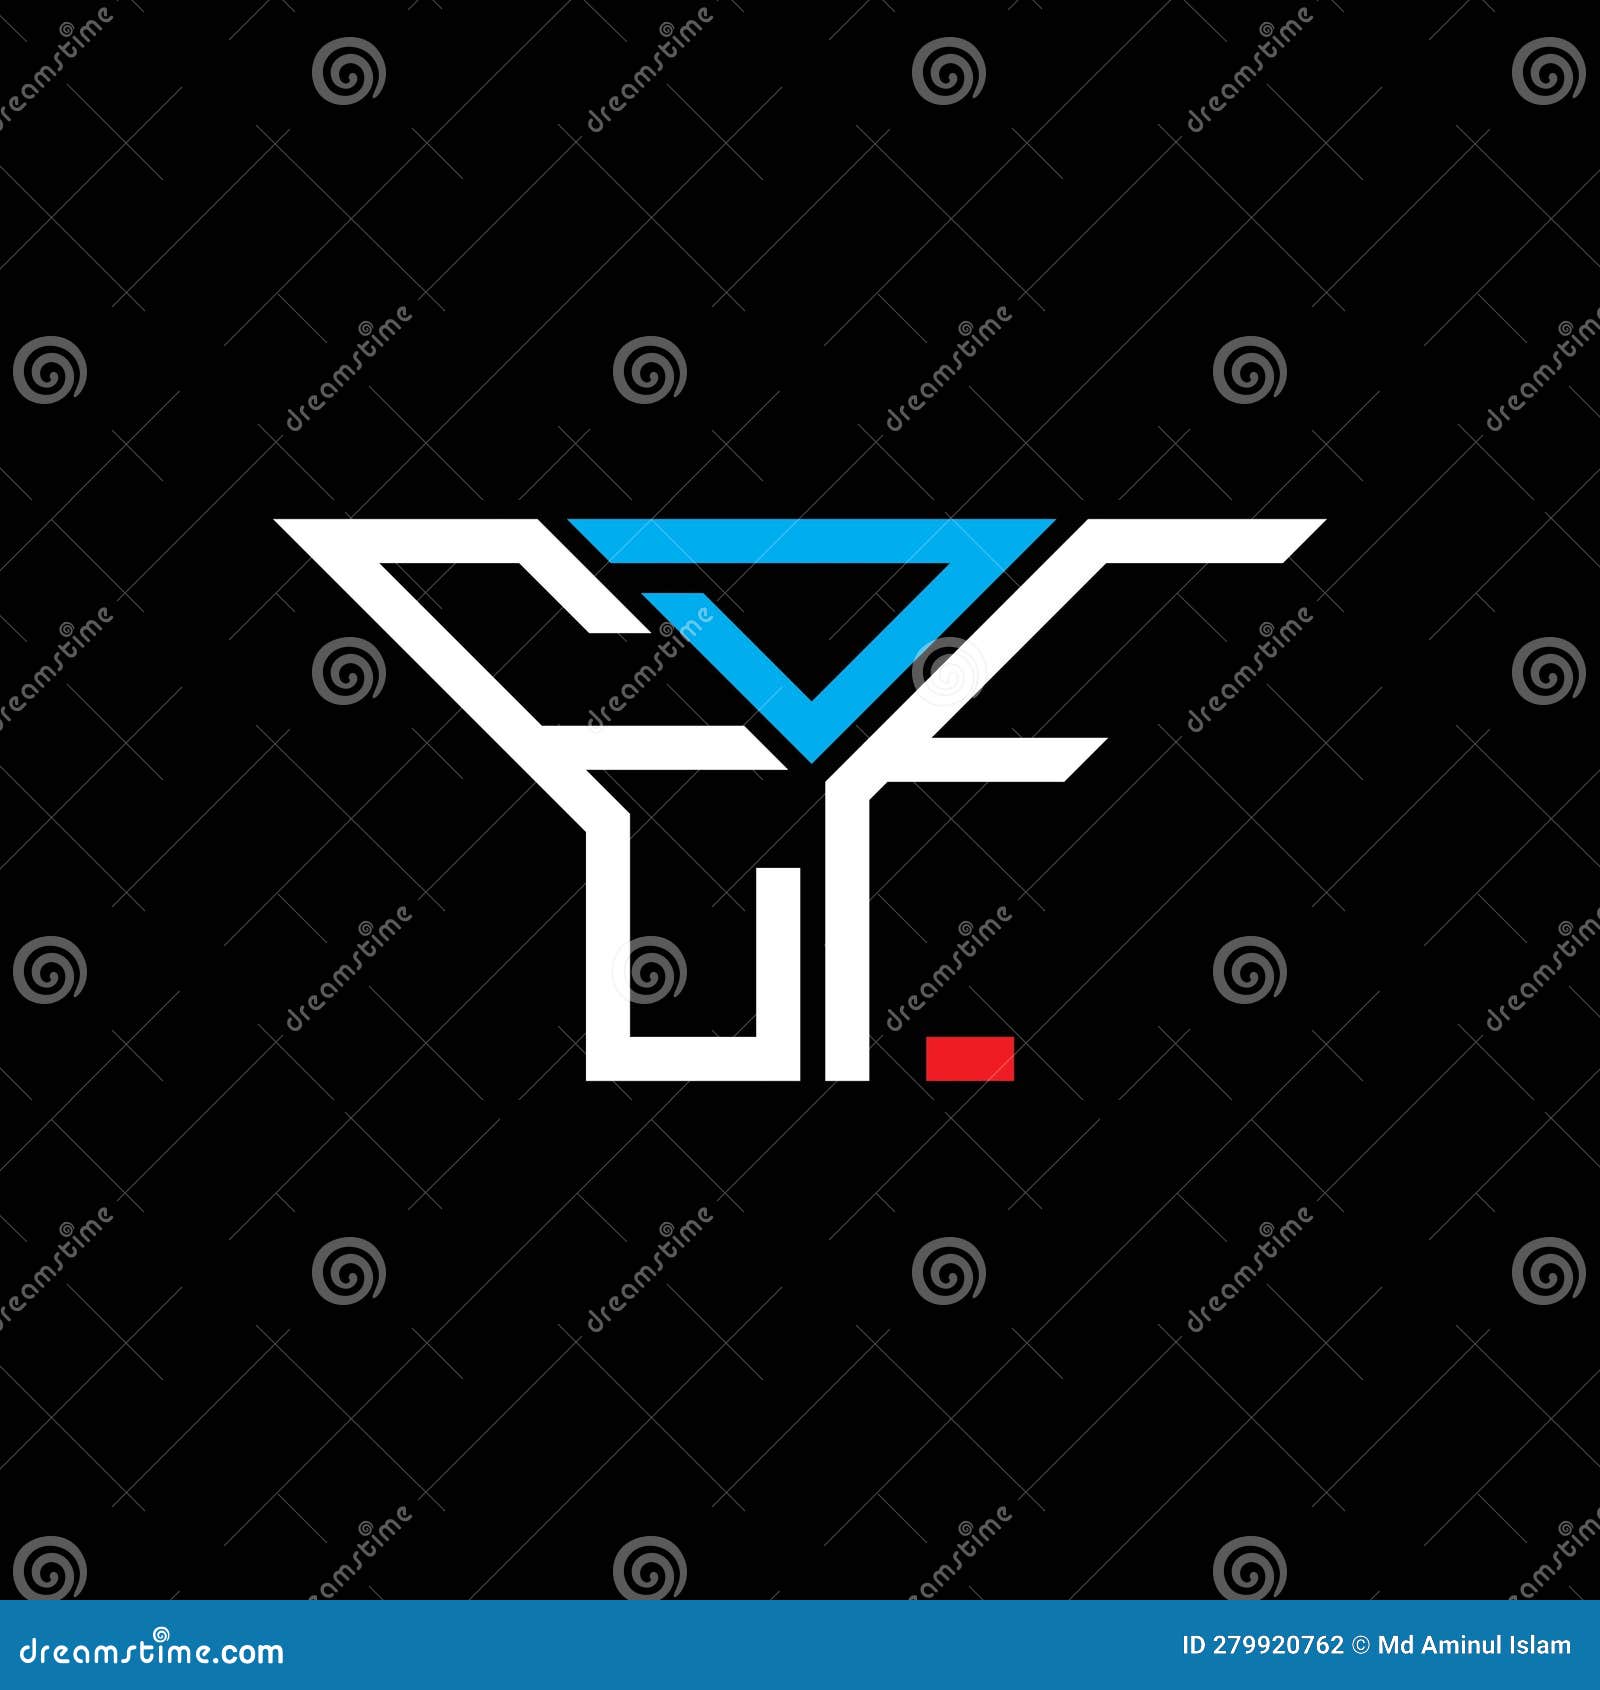 edf letter logo creative  with  graphic, edf